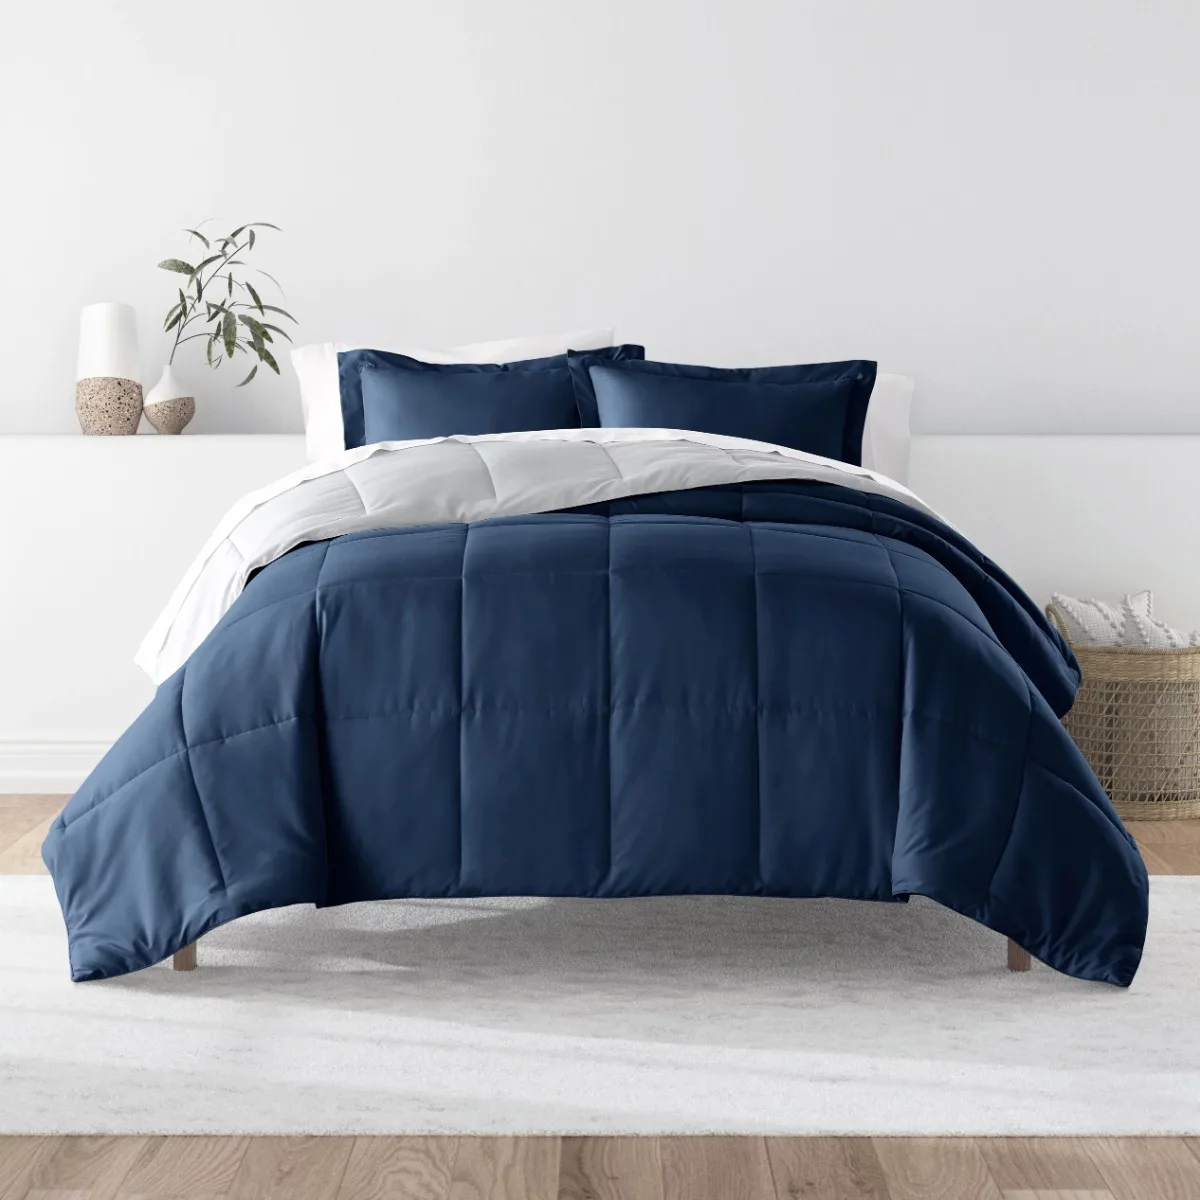 

Noble Linens 3-Piece Navy & Gray Reversible Down Alternative Comforter Set, King/Cal King